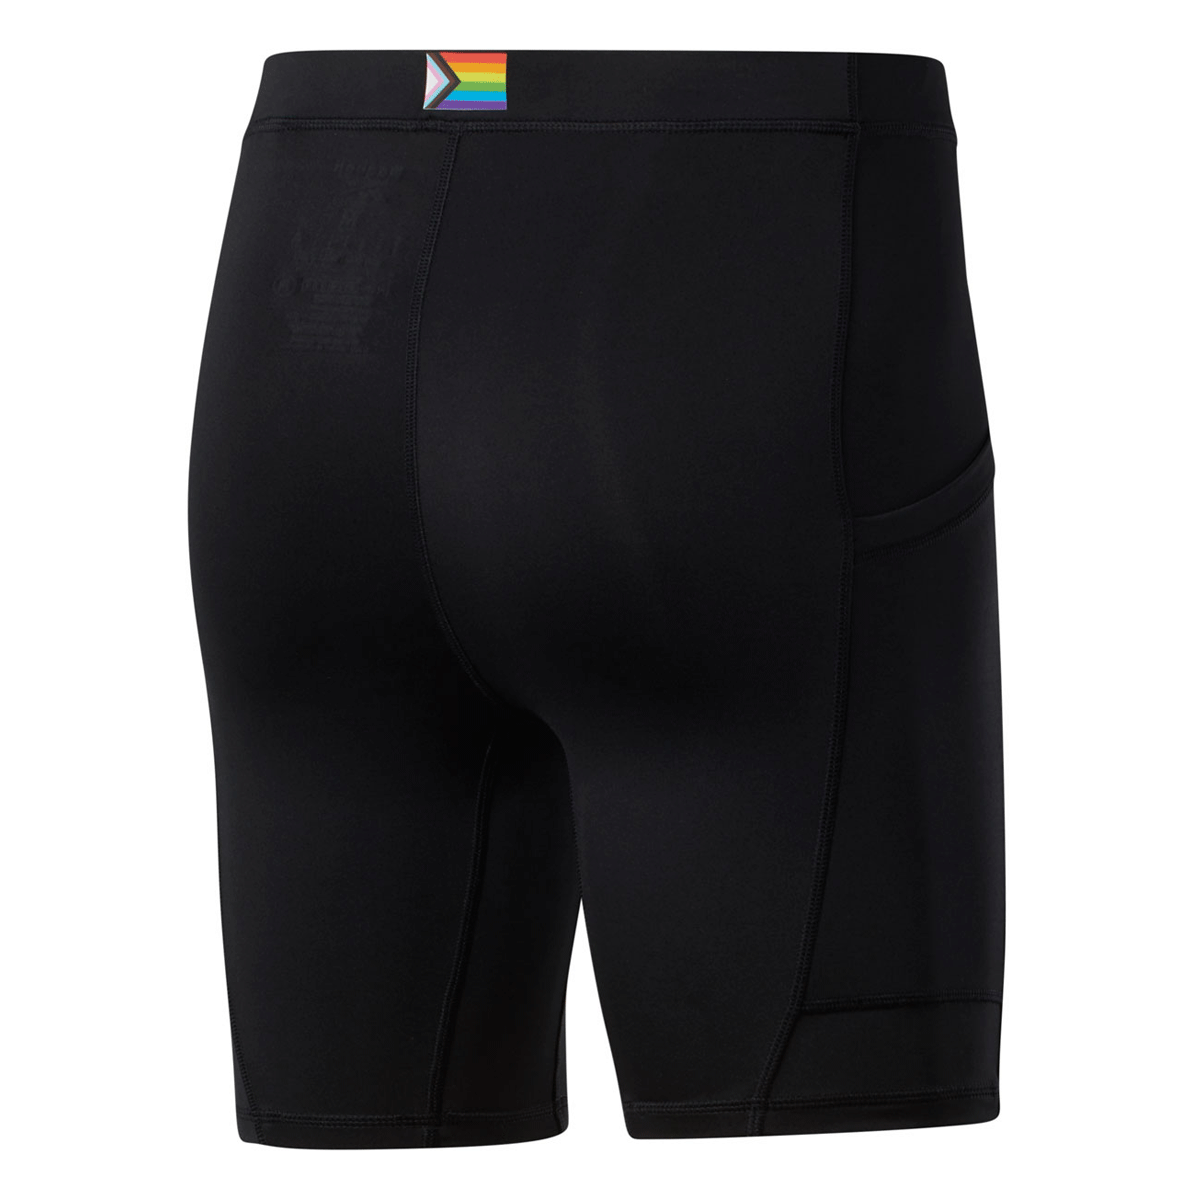 rebel sport bike shorts